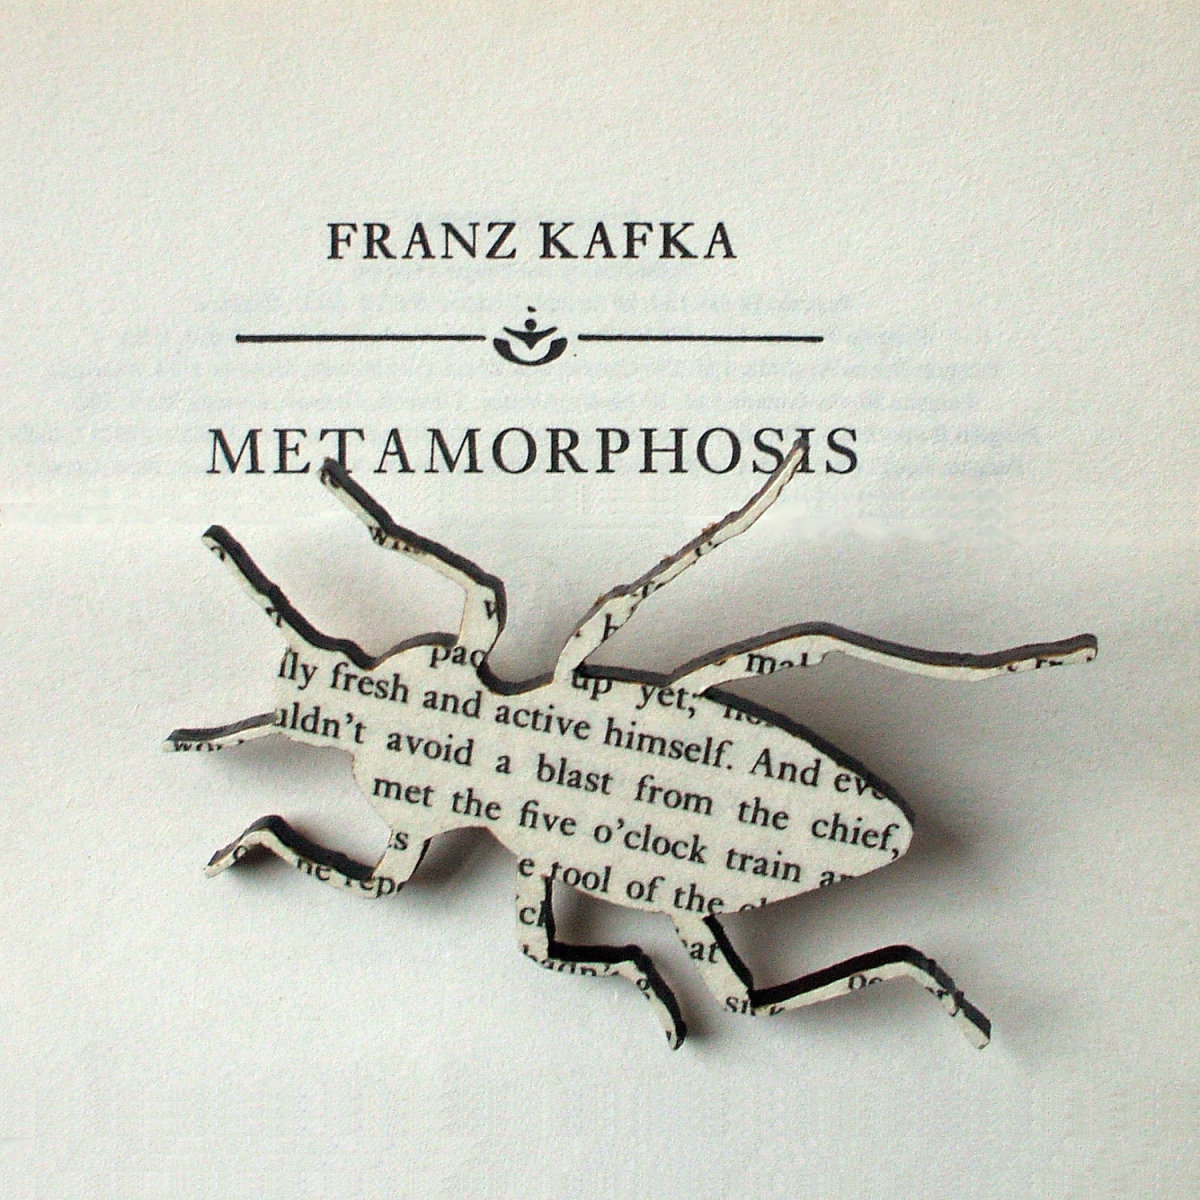 'Metamorphosis' by Franz Kafka